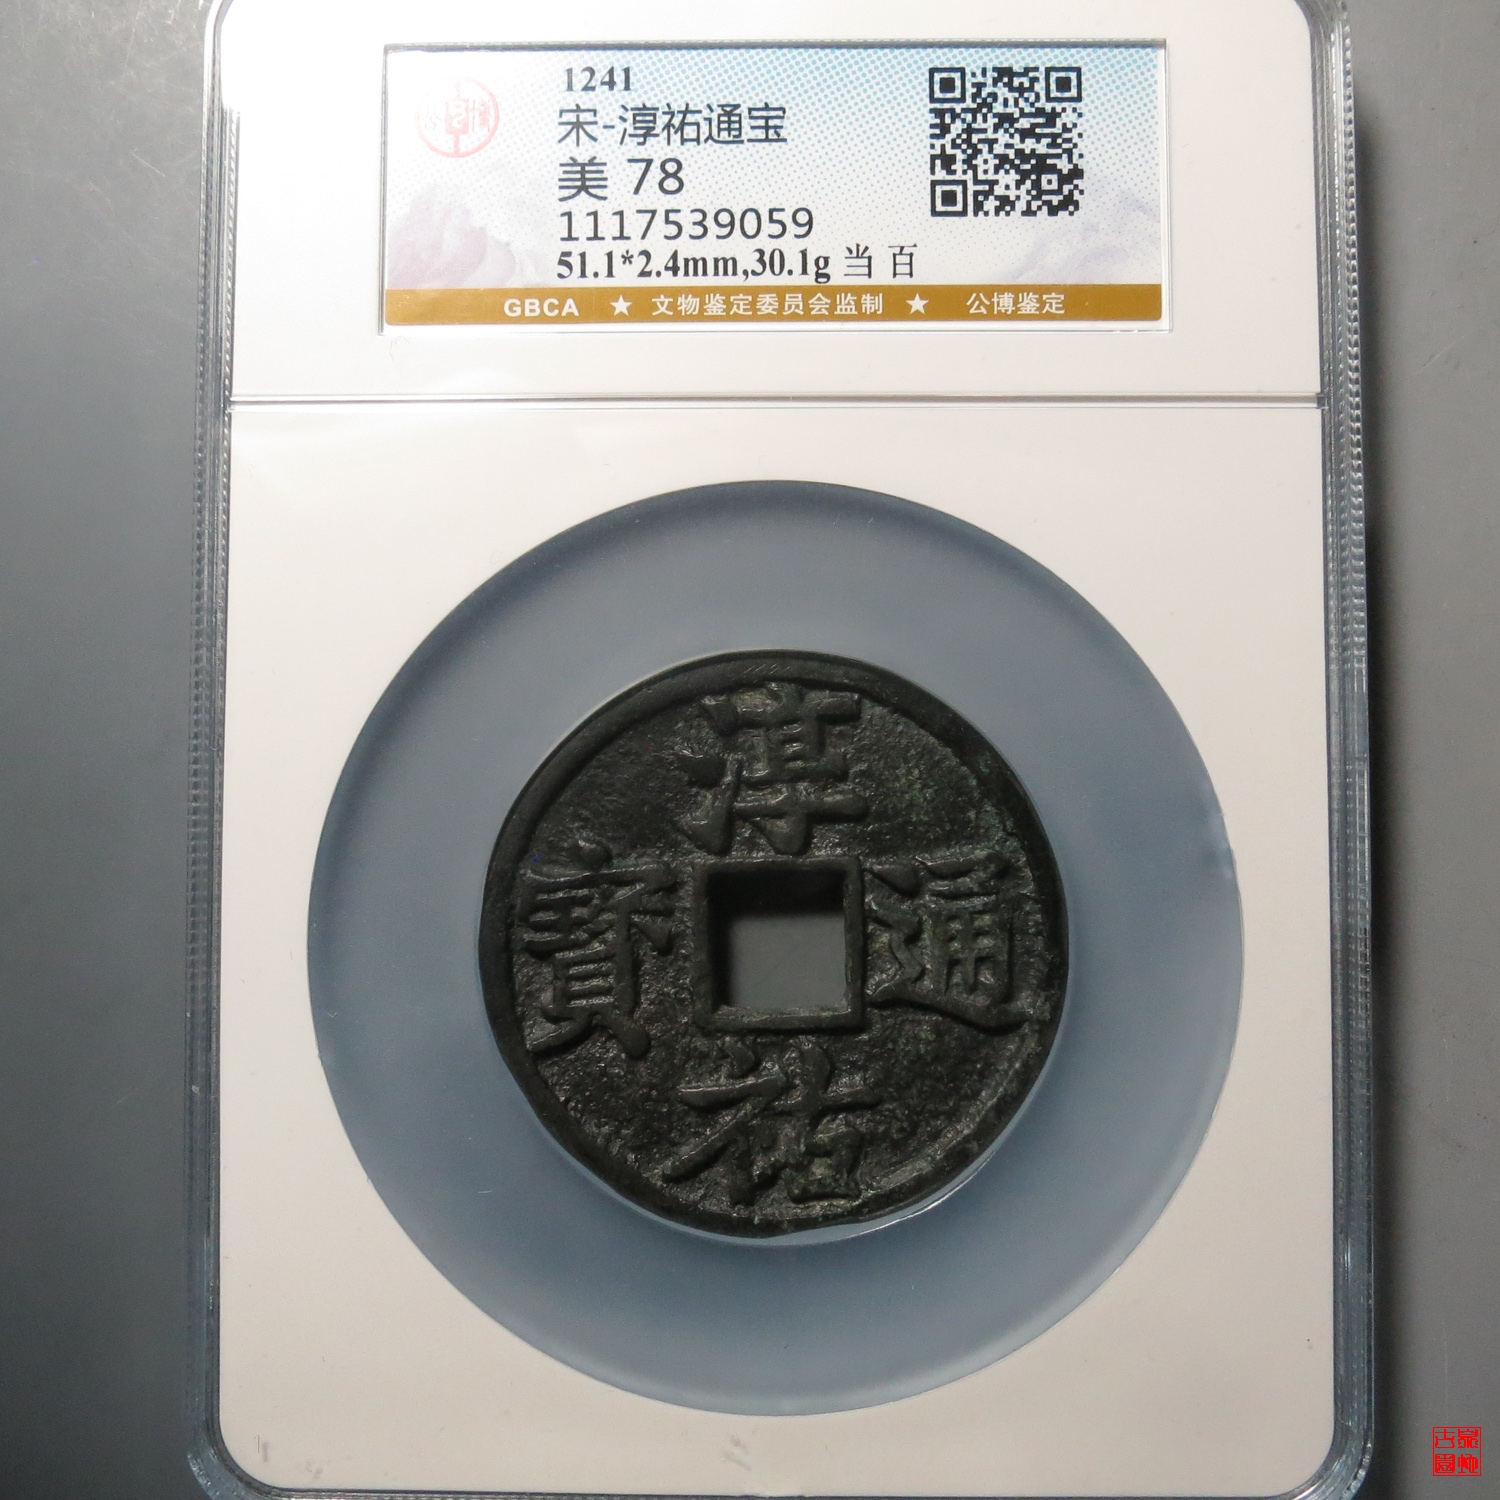 偉大な 【聚寶堂】中国古銭 S-115- 大清銅幣 十文 當制錢十文 28mm 7.42g 冬バーゲン NGC S-115 28mm 貨幣